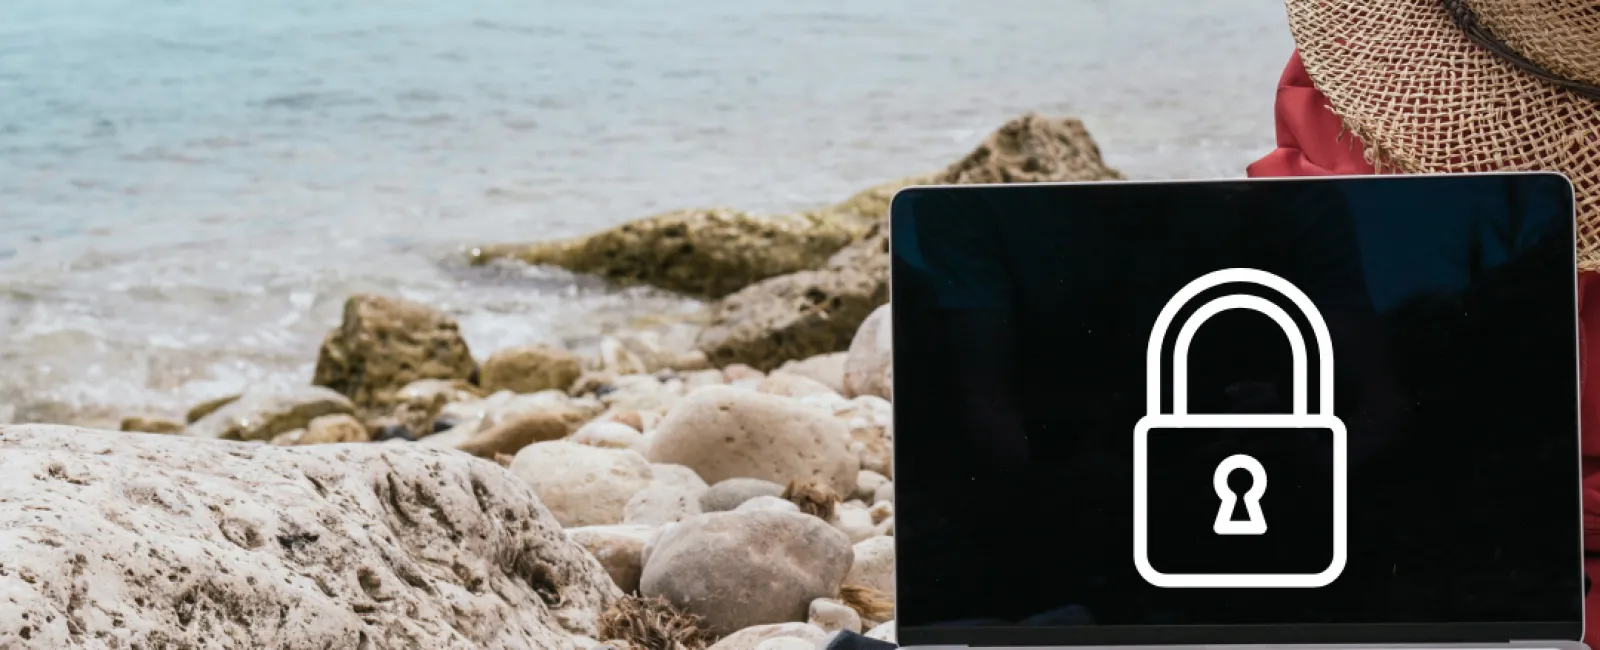 a laptop on a rocky beach